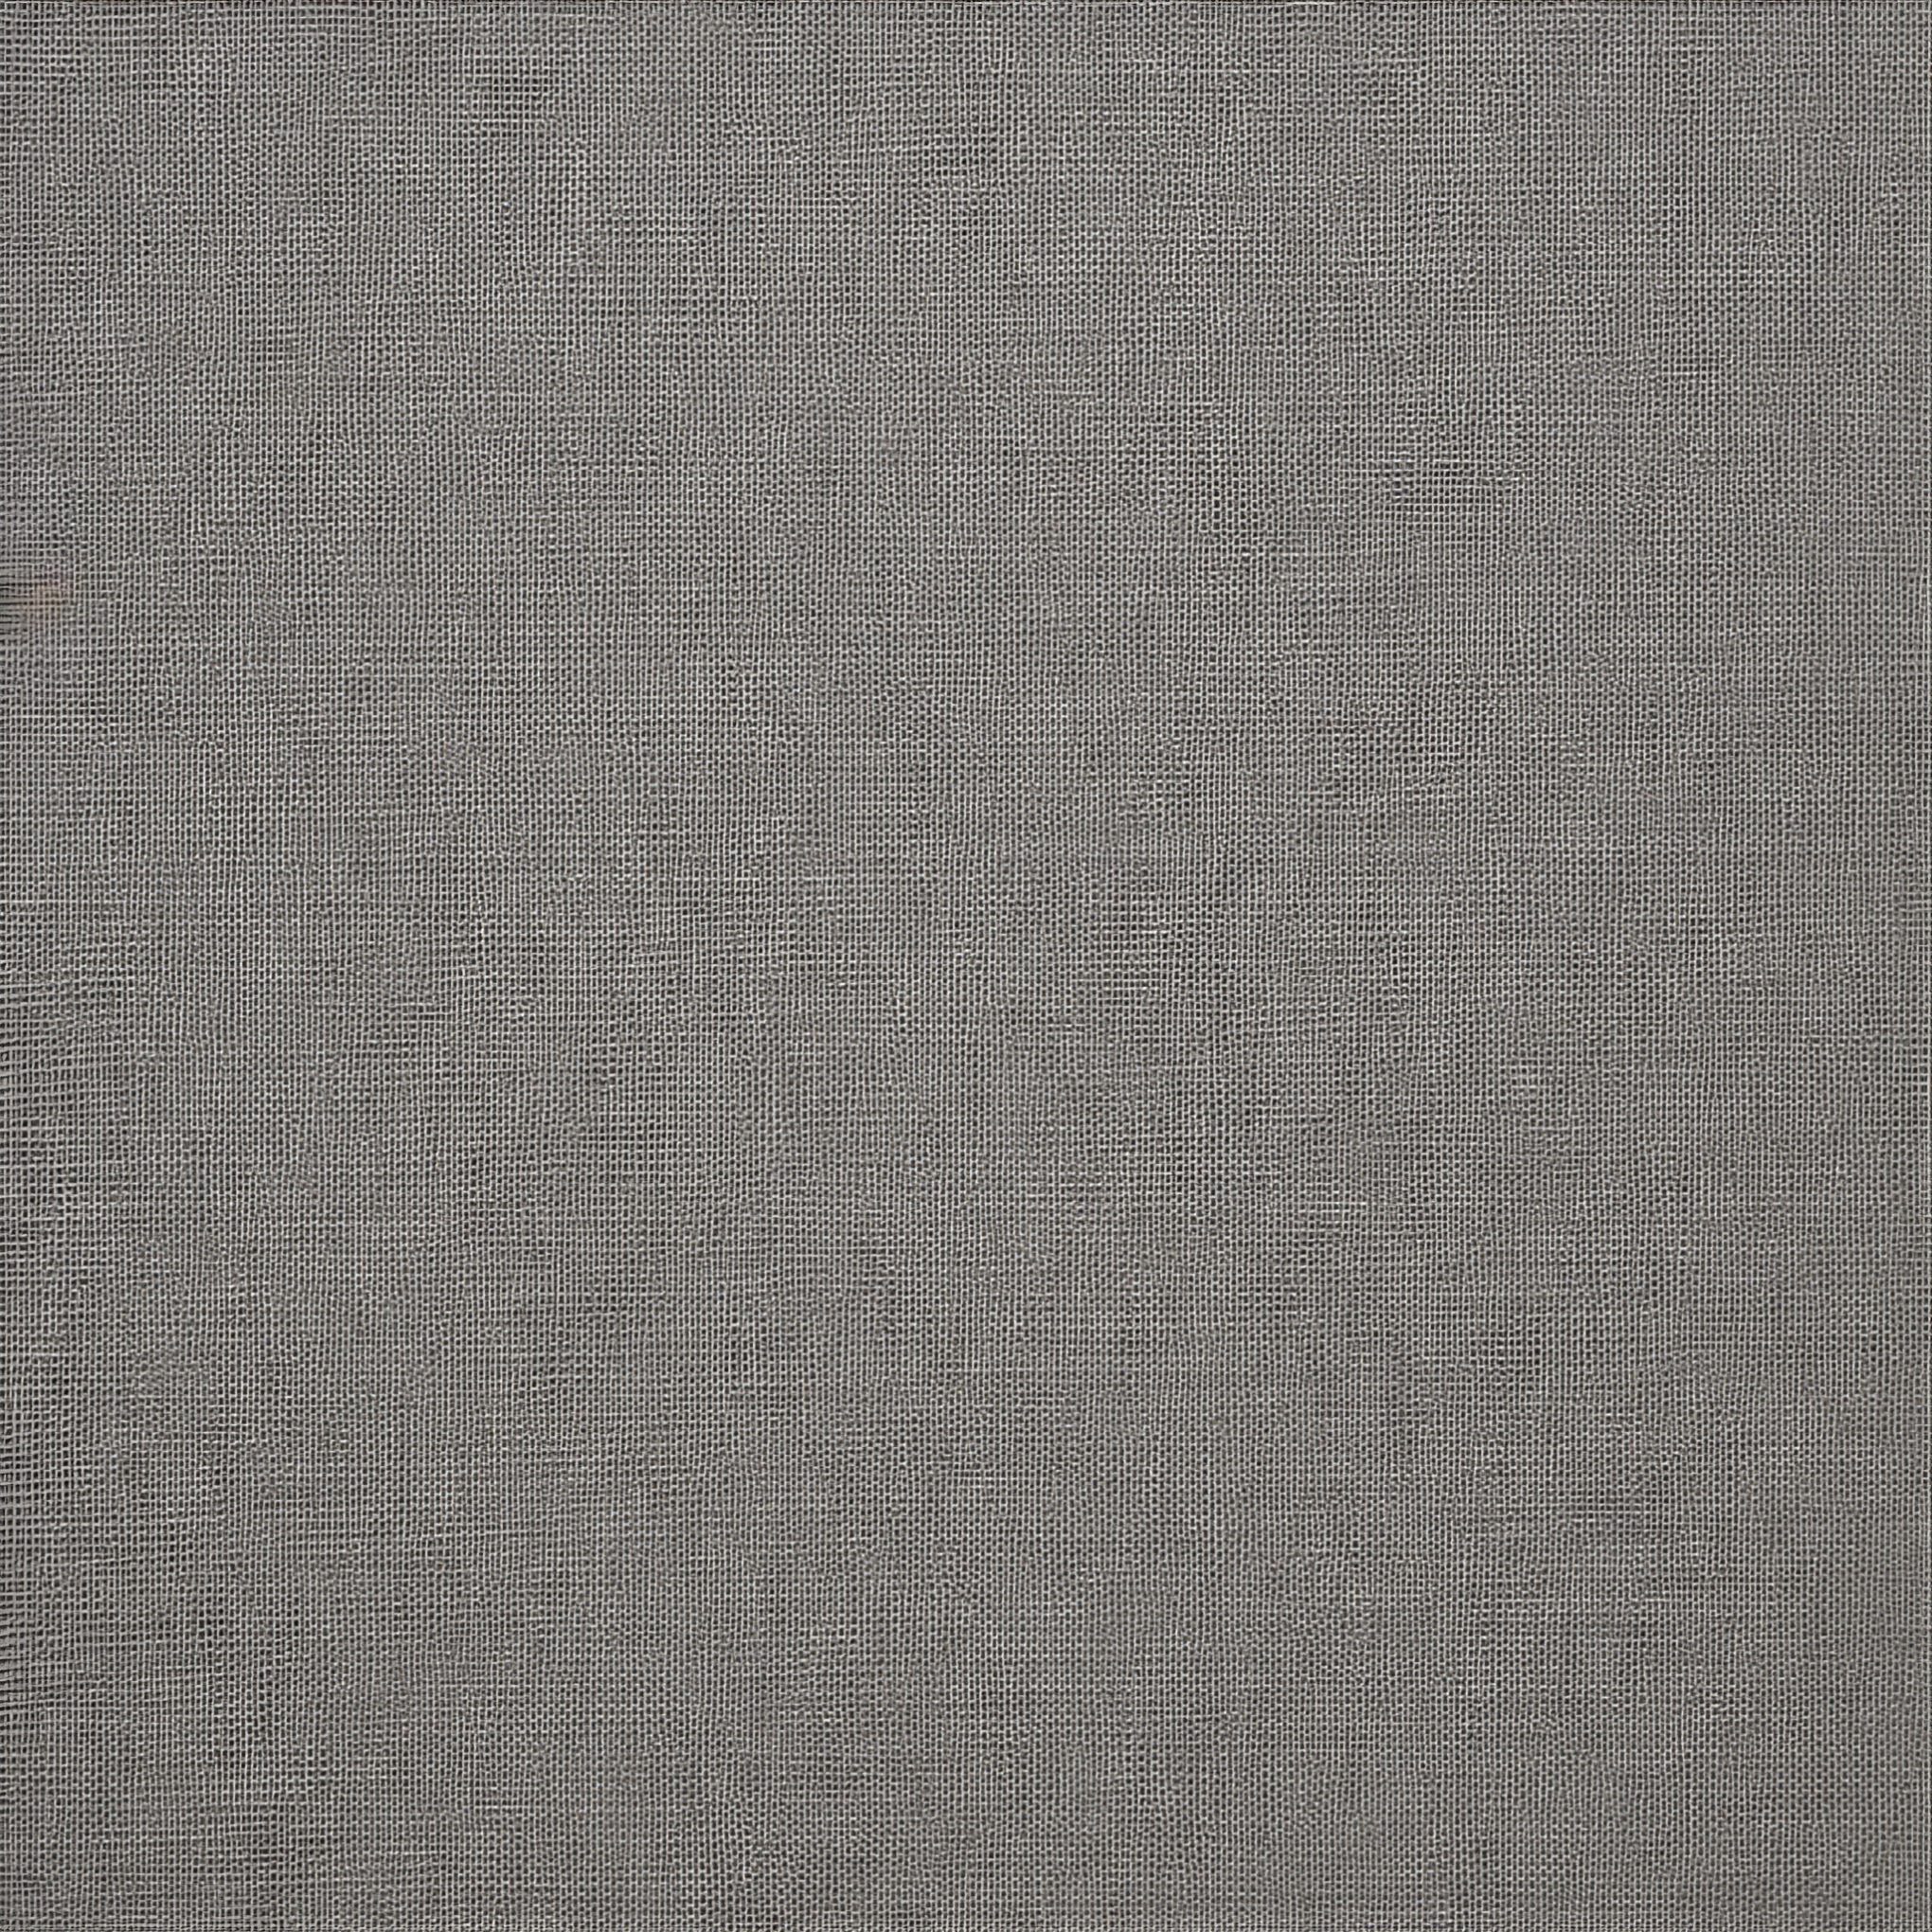 Grey Linen Rough Spun Material Background Texture Free Stock Image